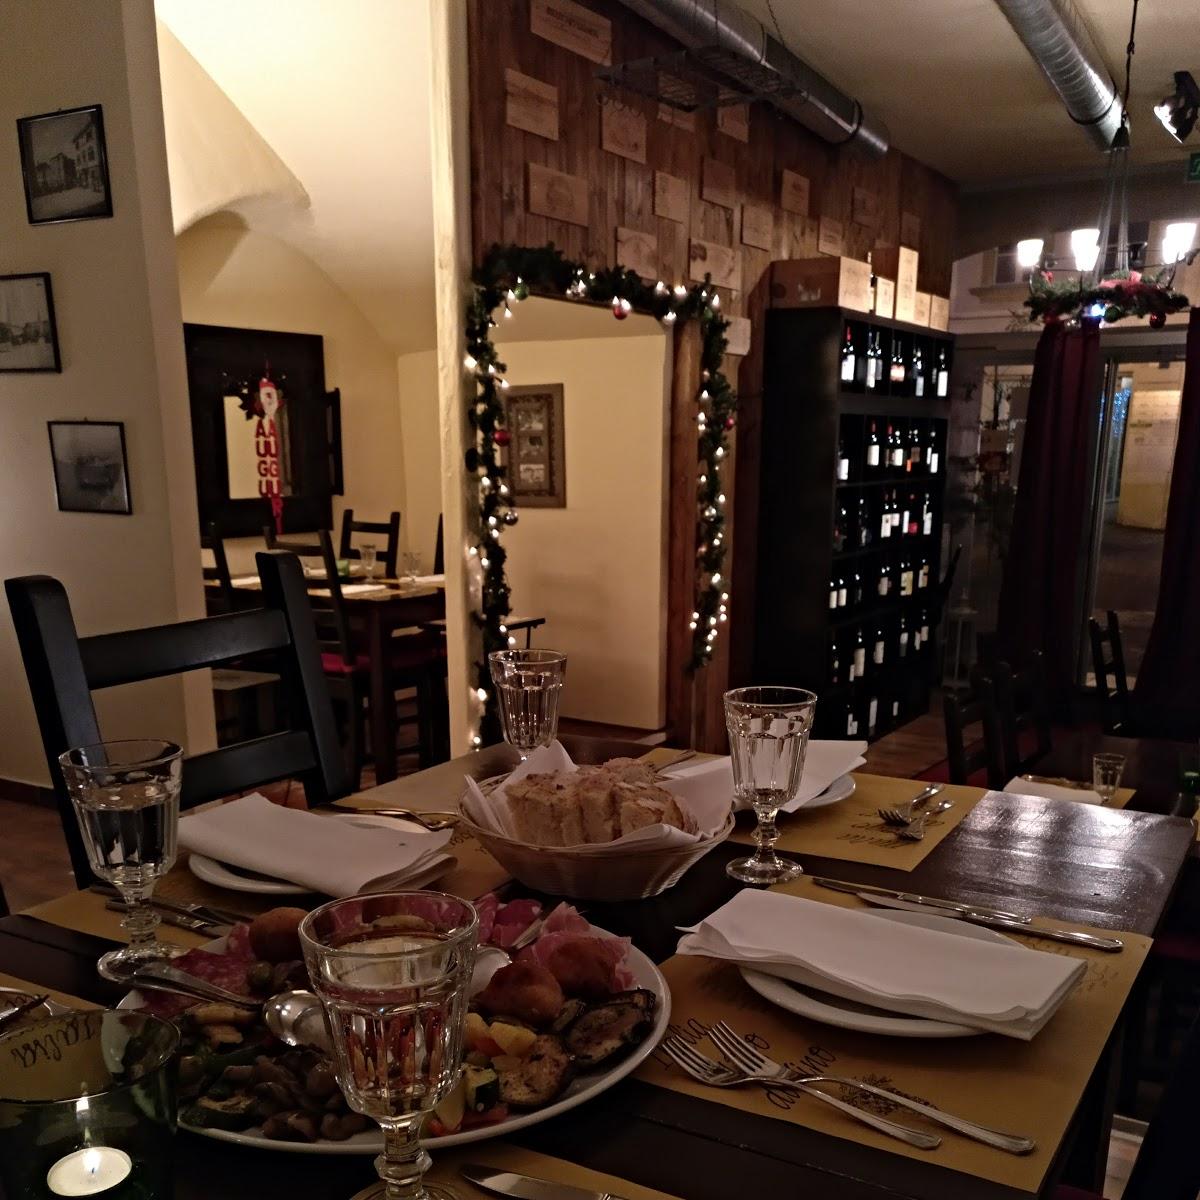 Restaurant "Osteria del Corso" in Eisenstadt